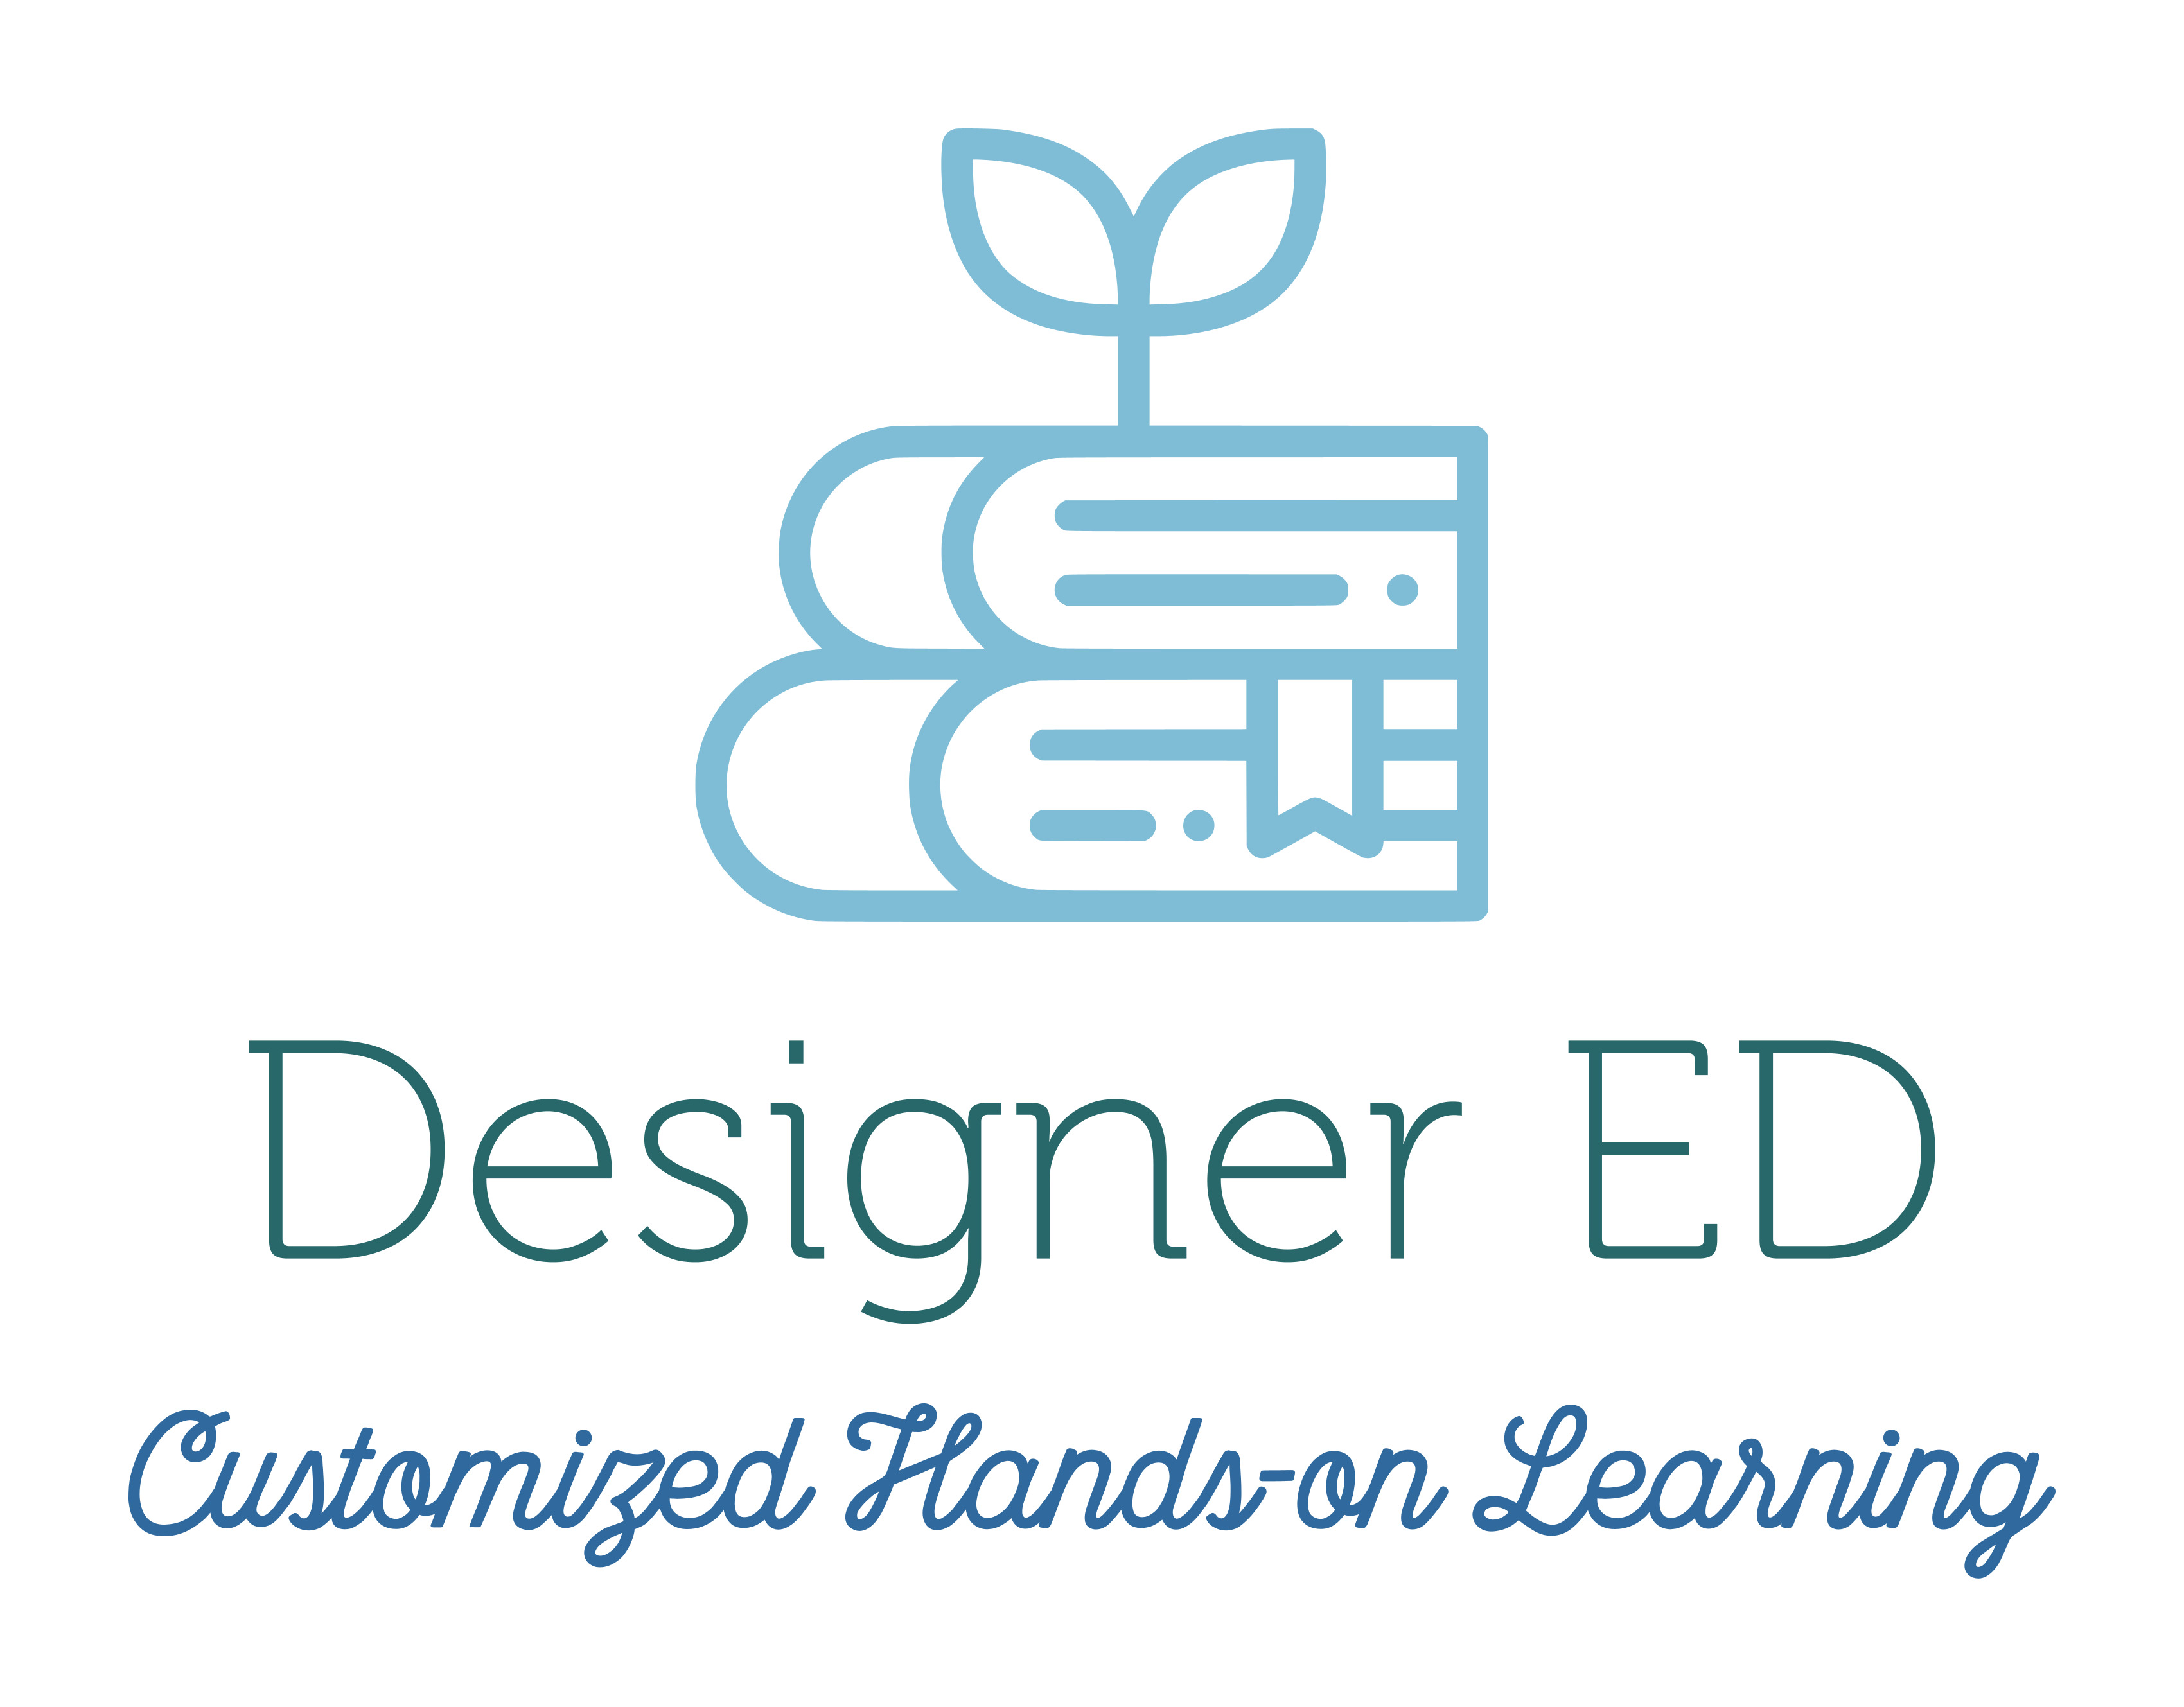 Designer Education logo